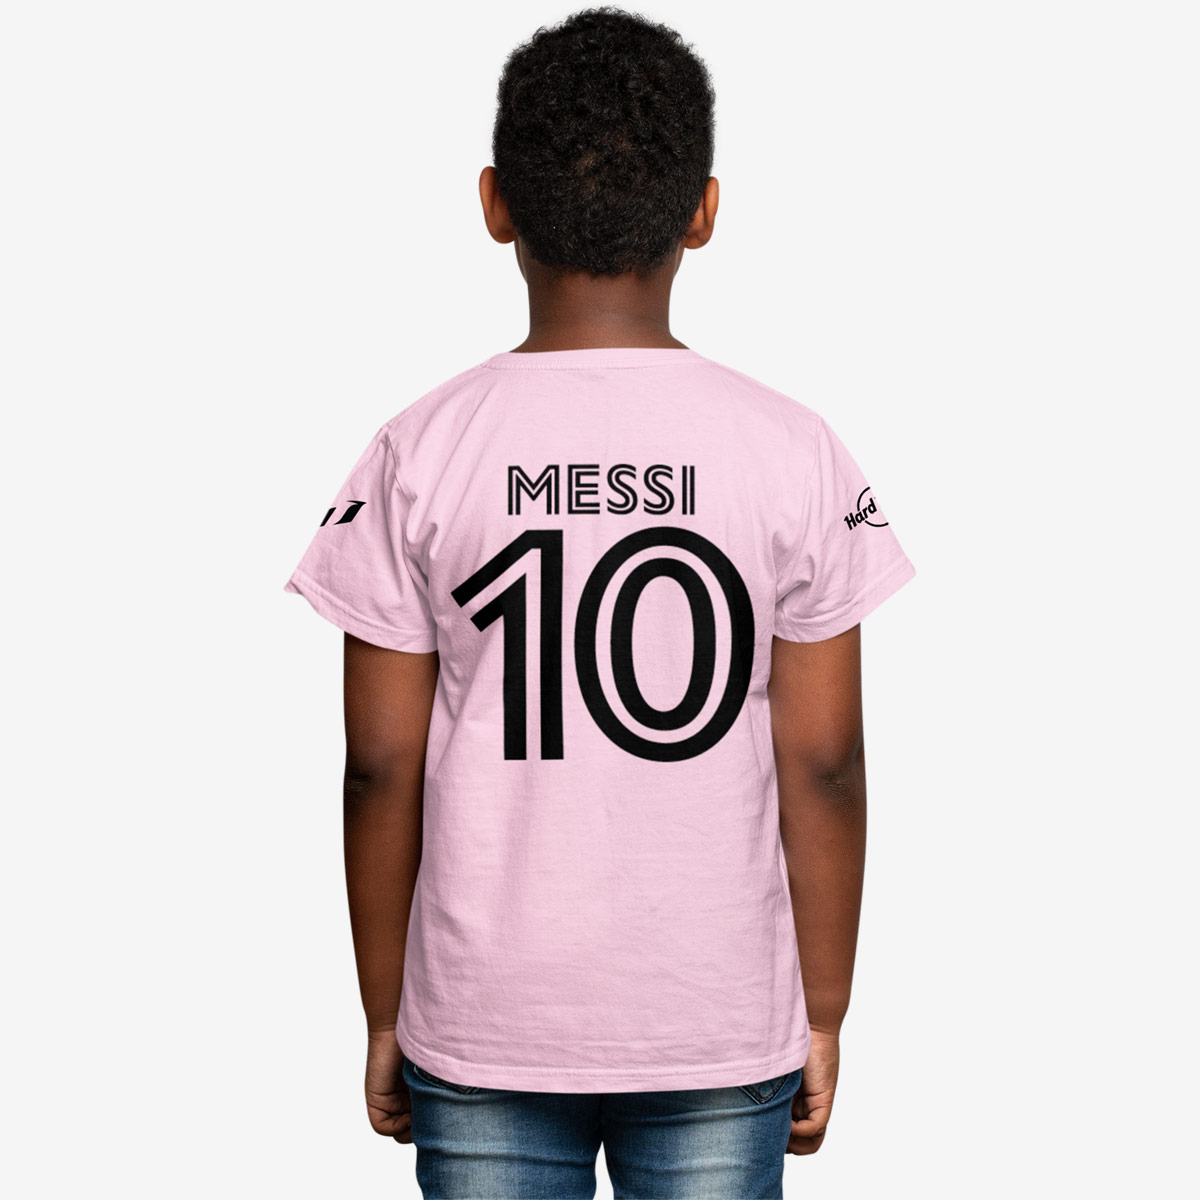 Messi x Hard Rock Kids Tee in Pink image number 6